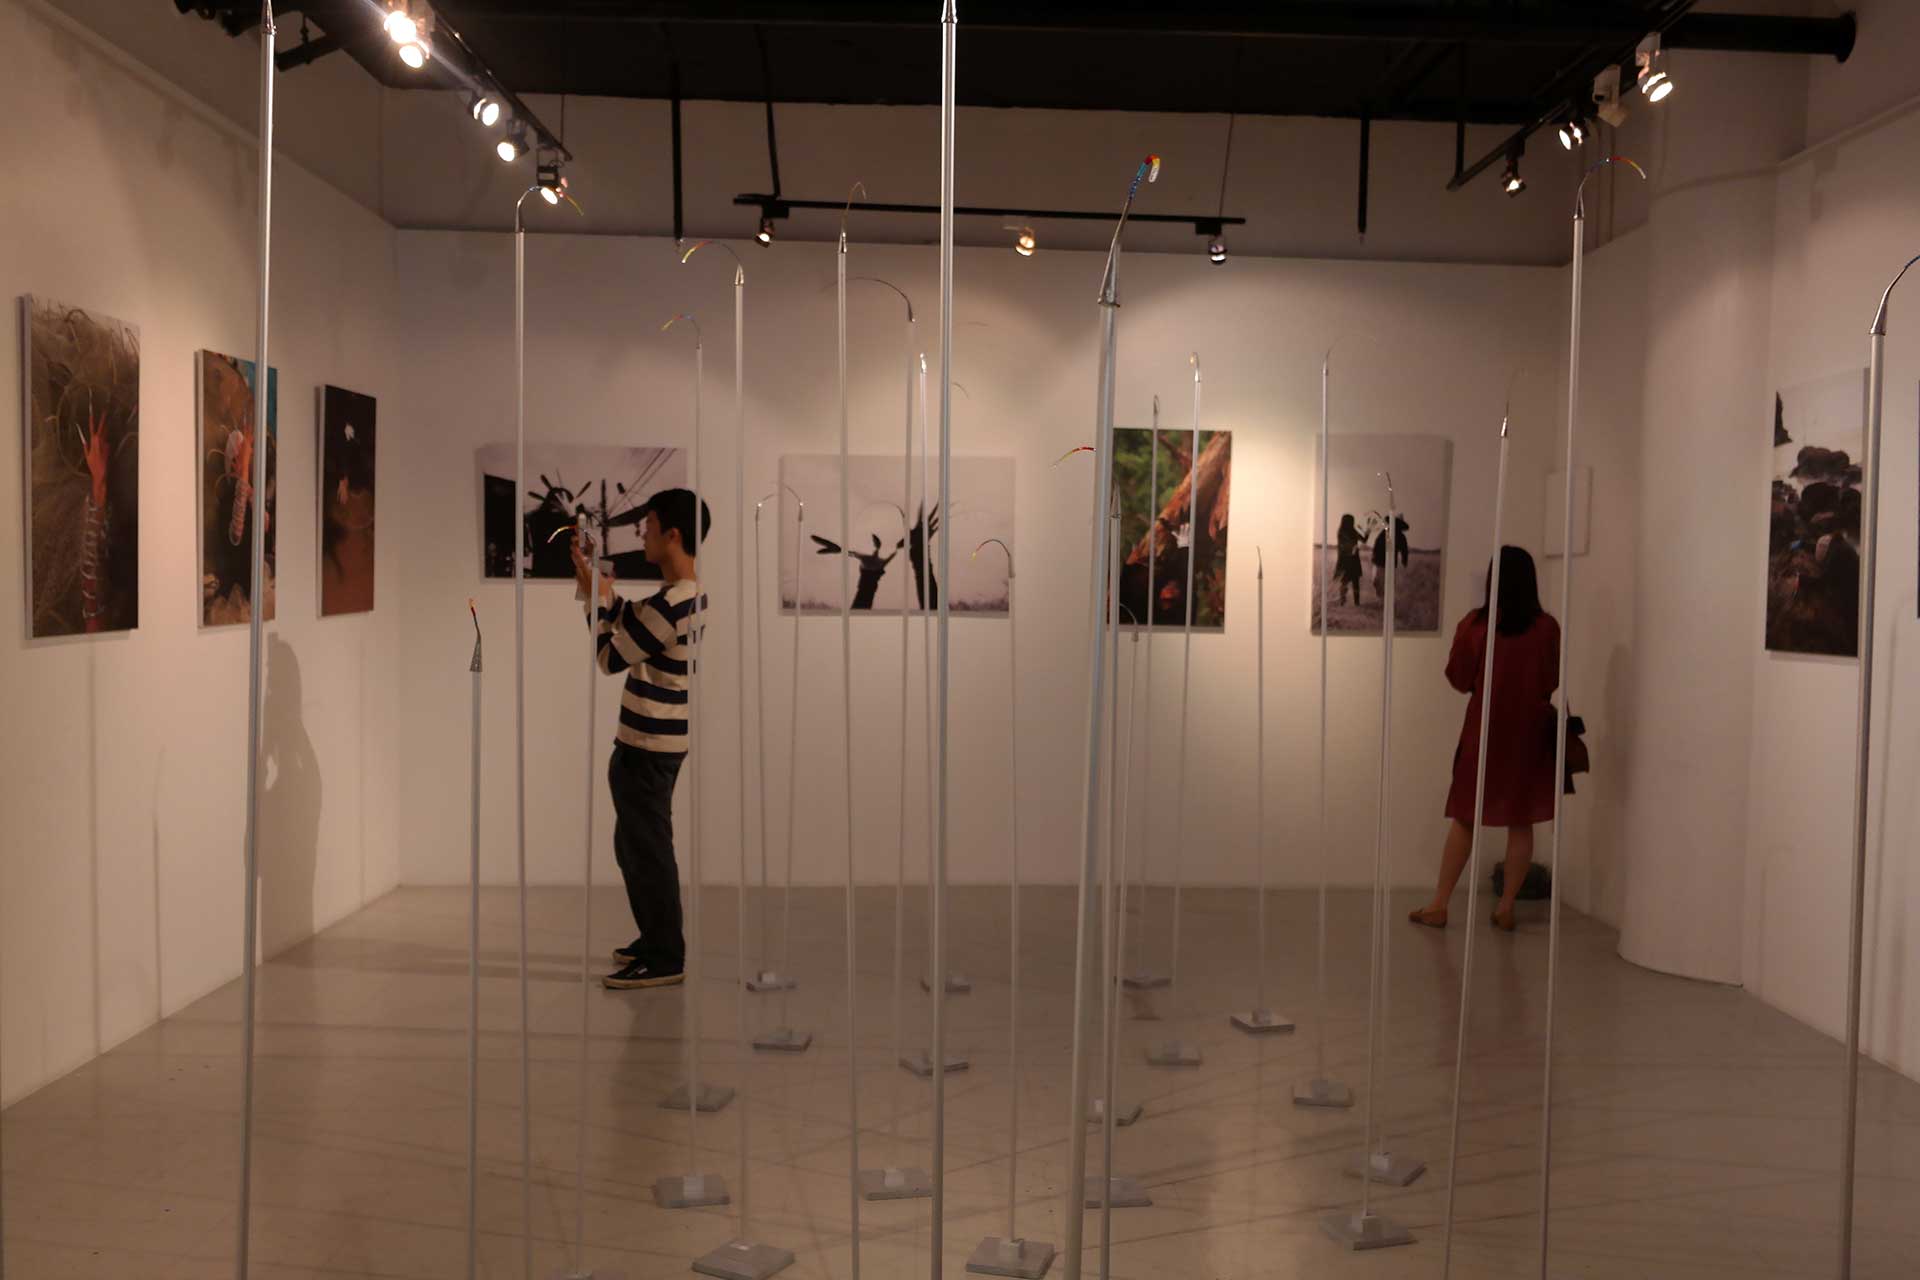 Exhibition Let Me Dance, The Performance Art in Photography Exhibition By Jittima Pholsawek | นิทรรศการ ศิลปะแสดงสดผ่านภาพถ่าย ปล่อยให้ฉันร่ายรำ โดย จิตติมา ผลเสวก